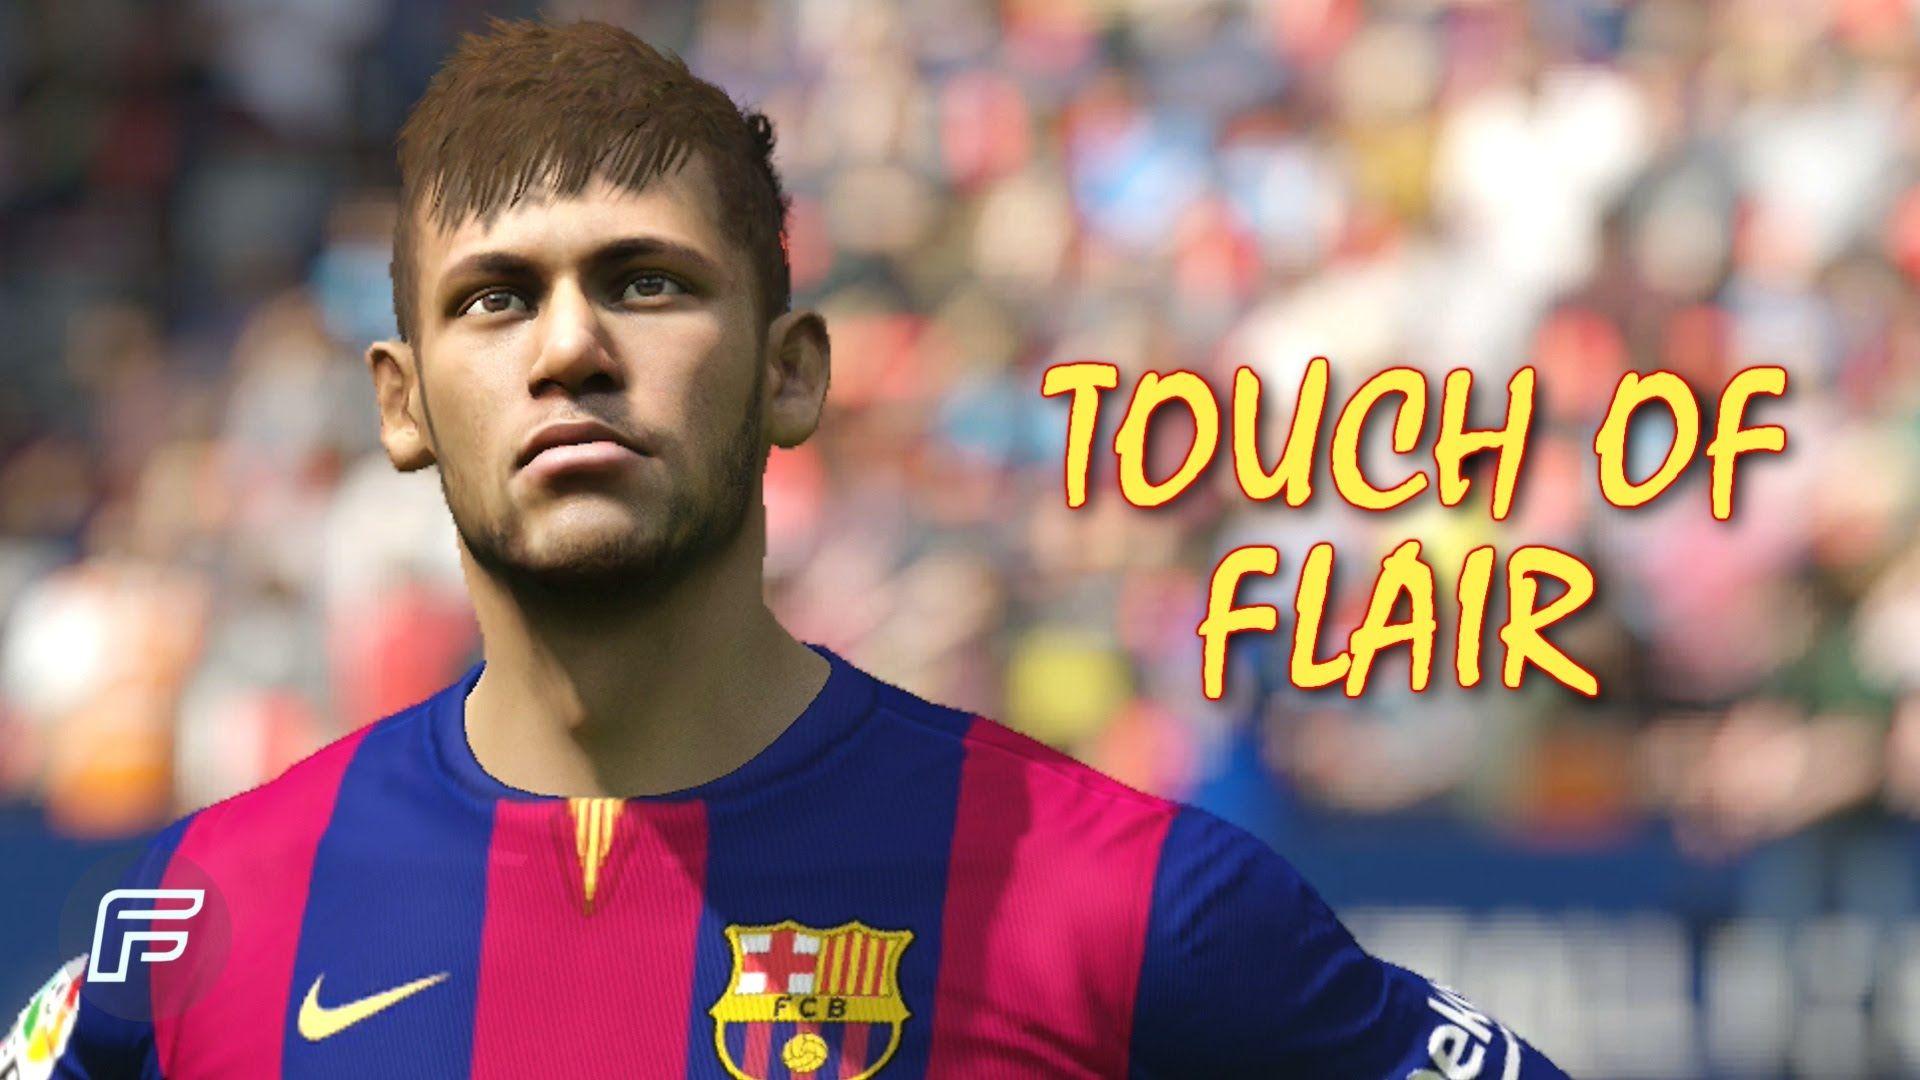 Neymar Jr. "Touch of Flair" (FIFA 15 Edit)